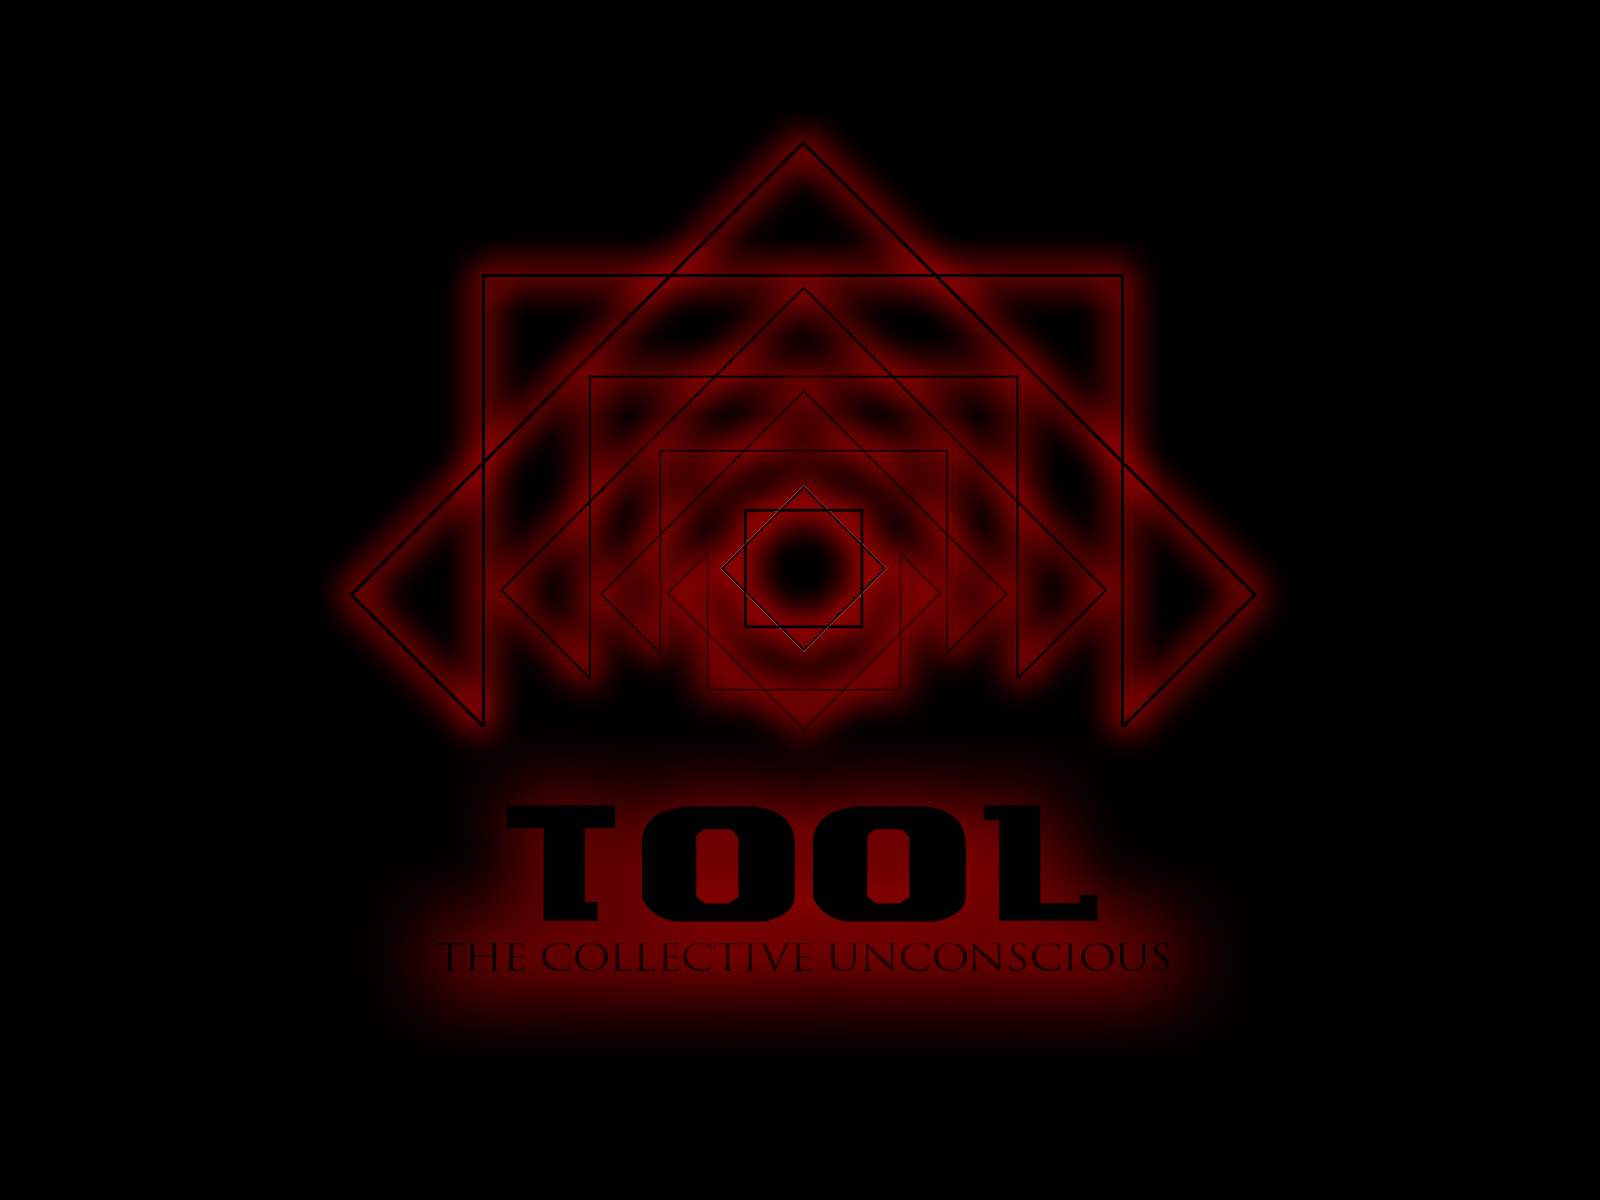 Tool - Tool Wallpaper (109001) - Fanpop